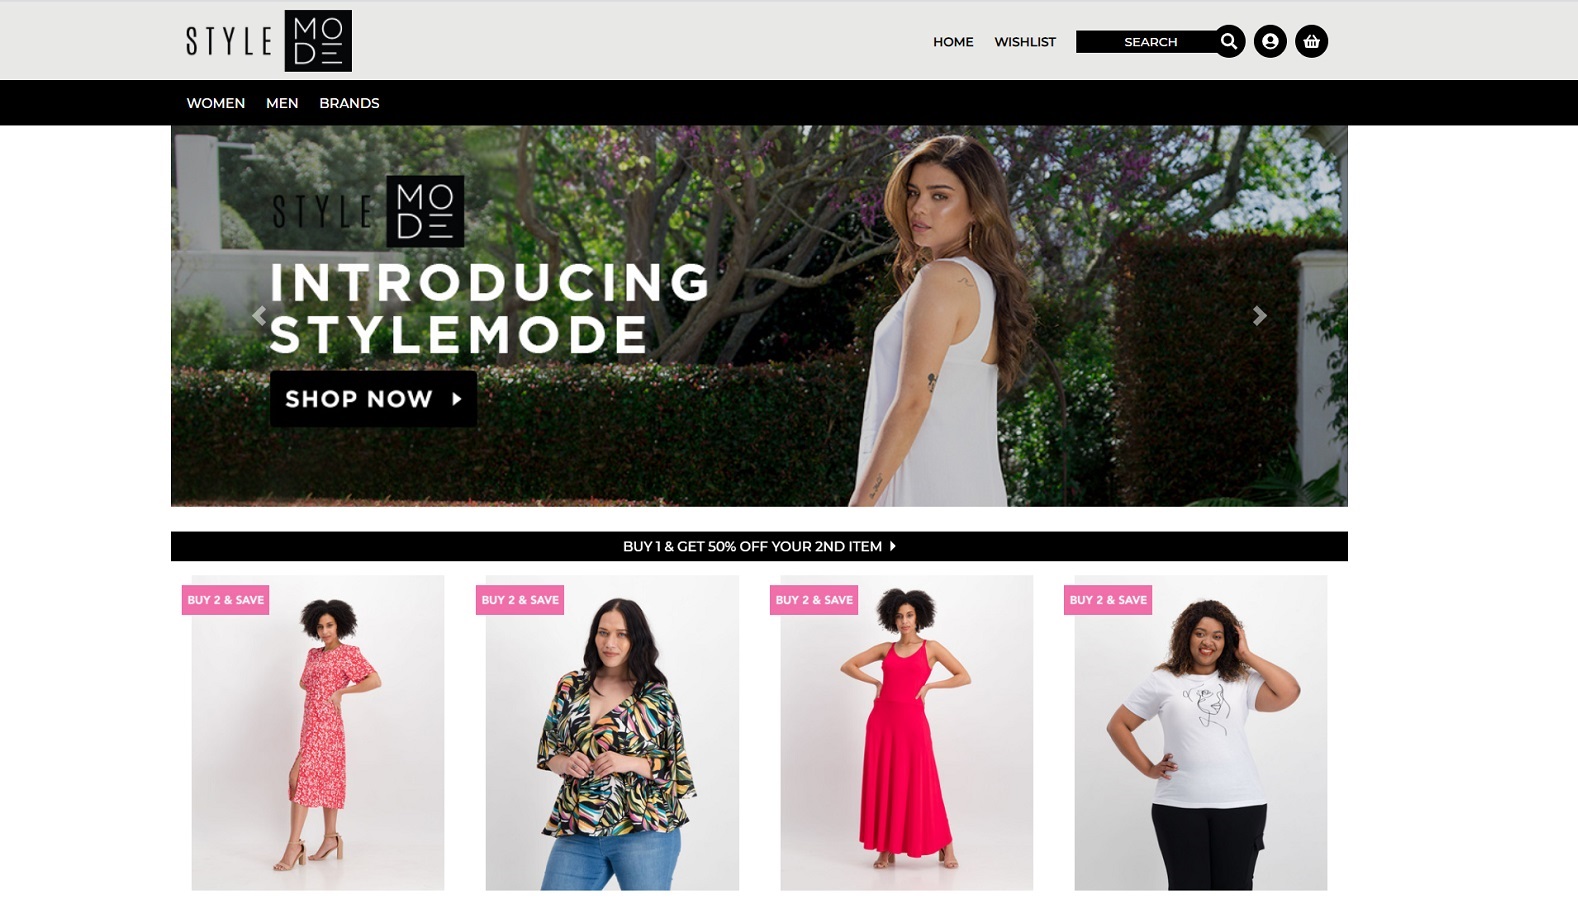  Fashion Online-Shop